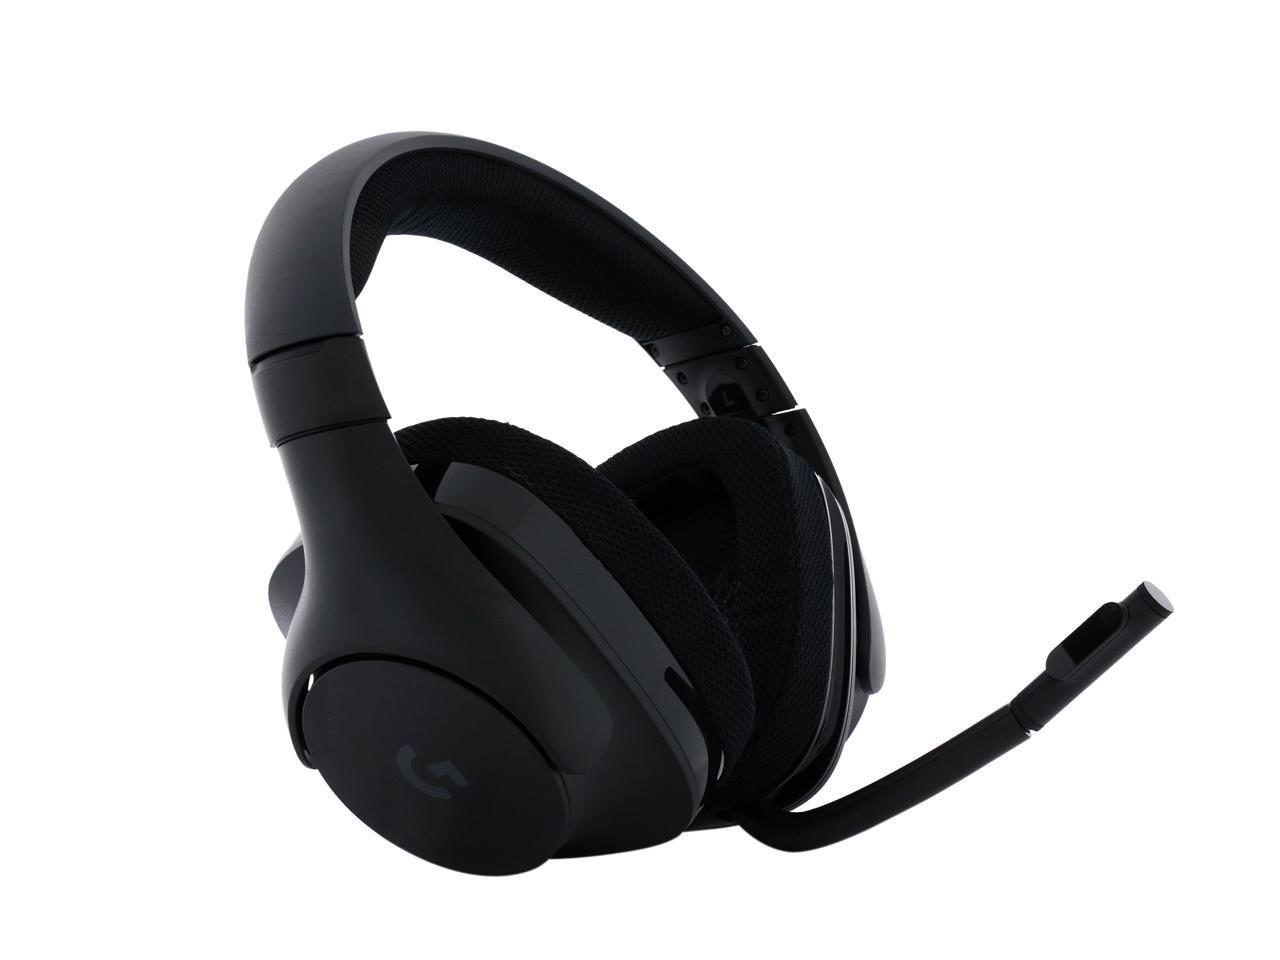 R Verkeersopstopping mannelijk Logitech G533 Wireless DTS 7.1 Surround Sound Gaming Headset - Newegg.com